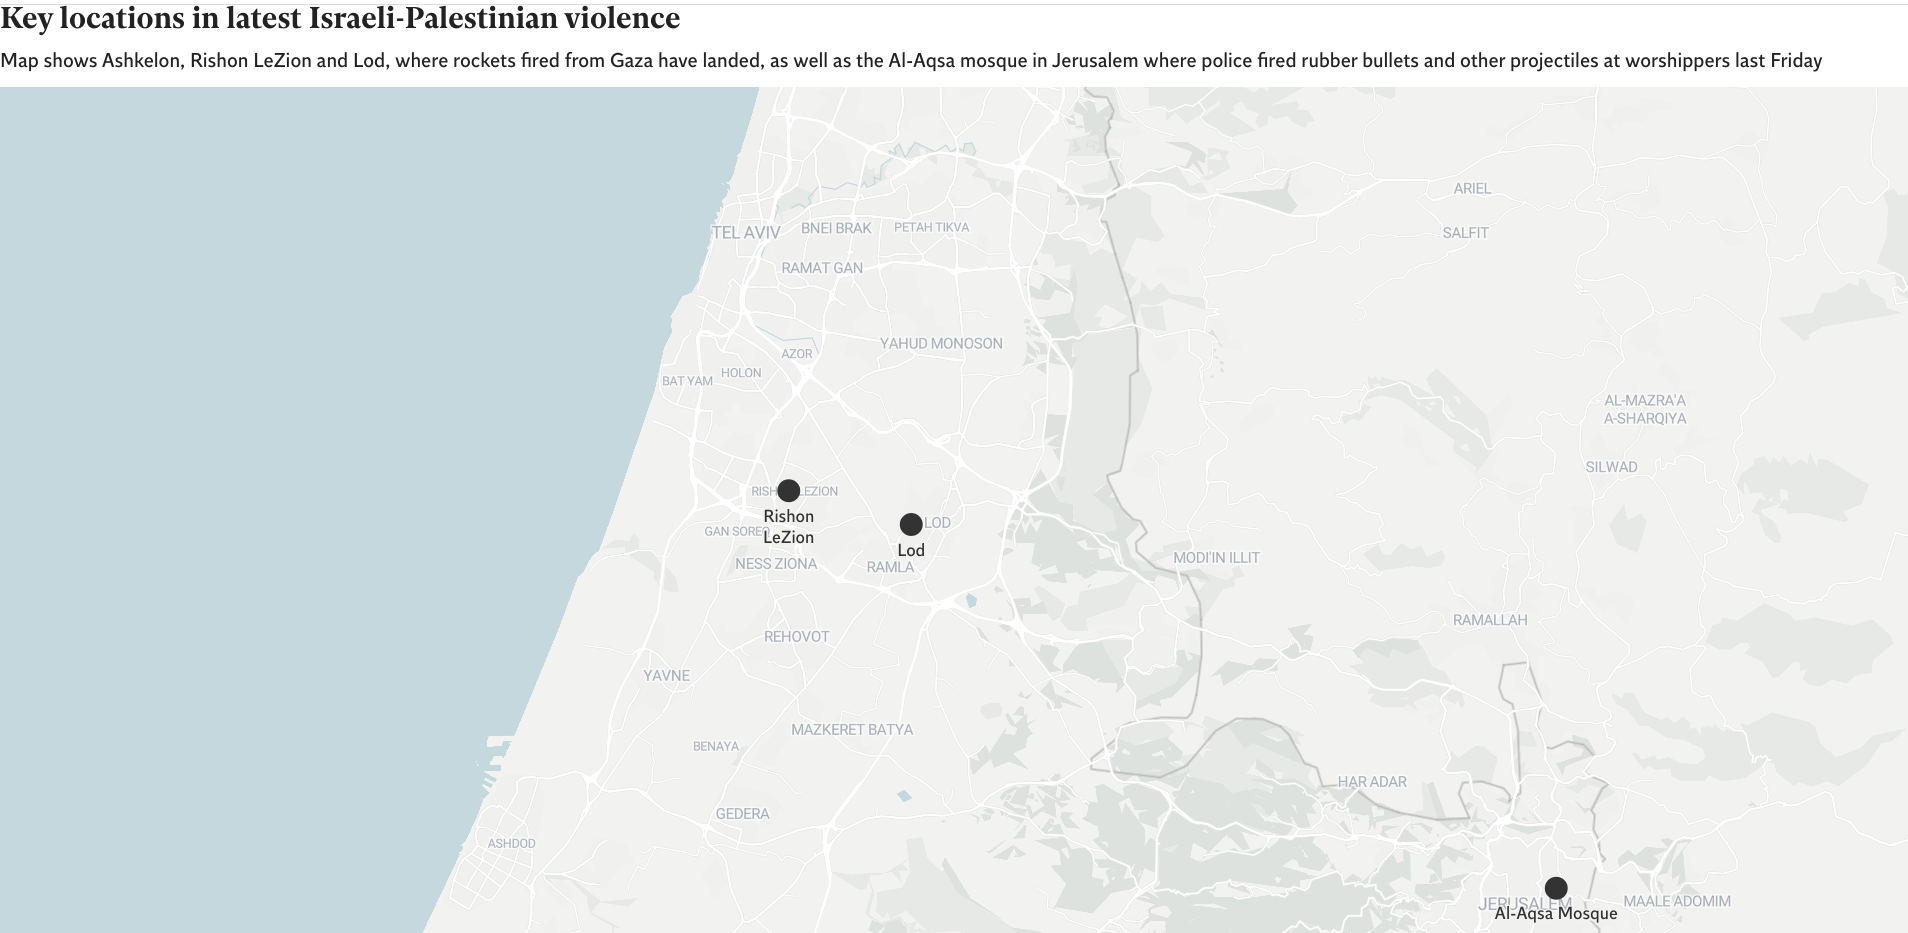 Key locations in latest Israeli-Palestinian violence